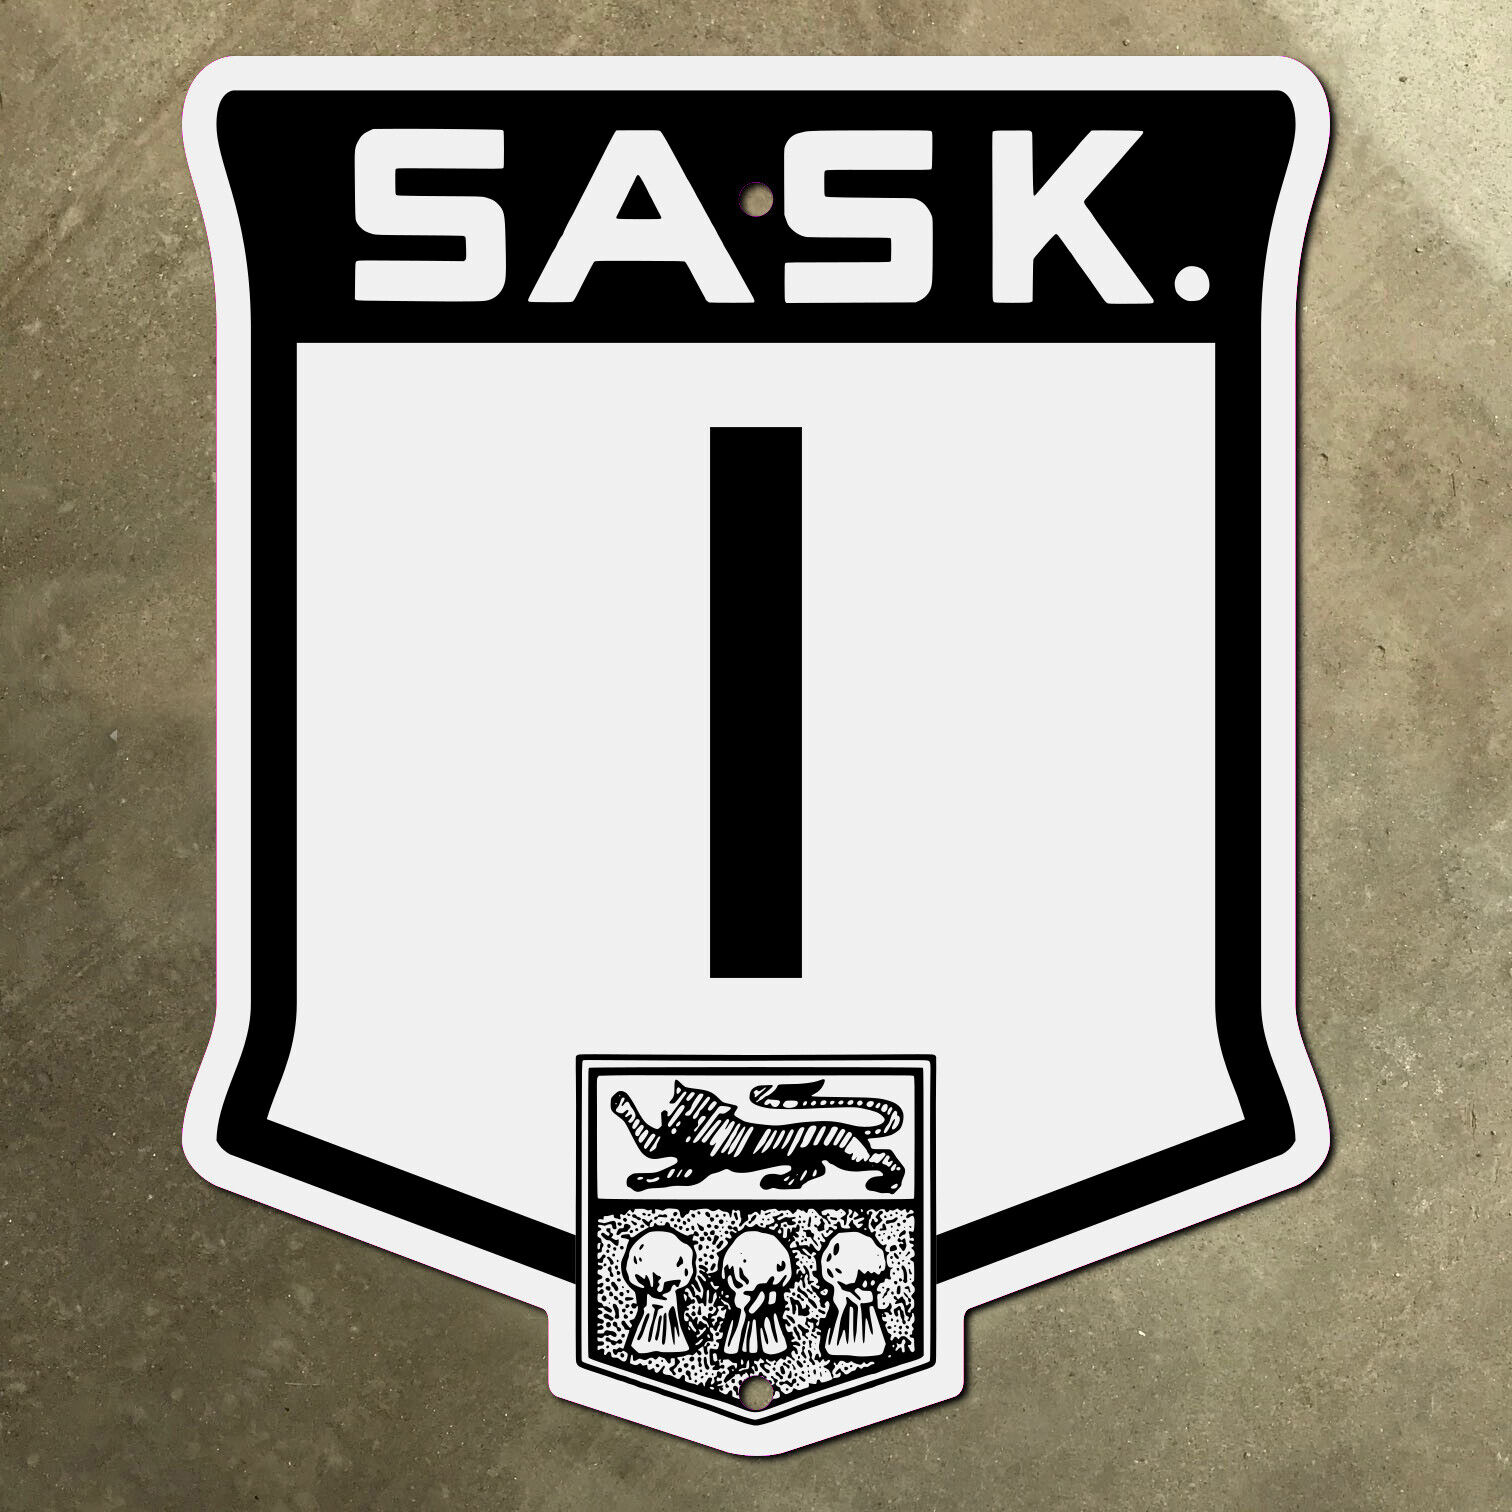 Saskatchewan provincial highway 1 route marker road sign Canada 1940s crest